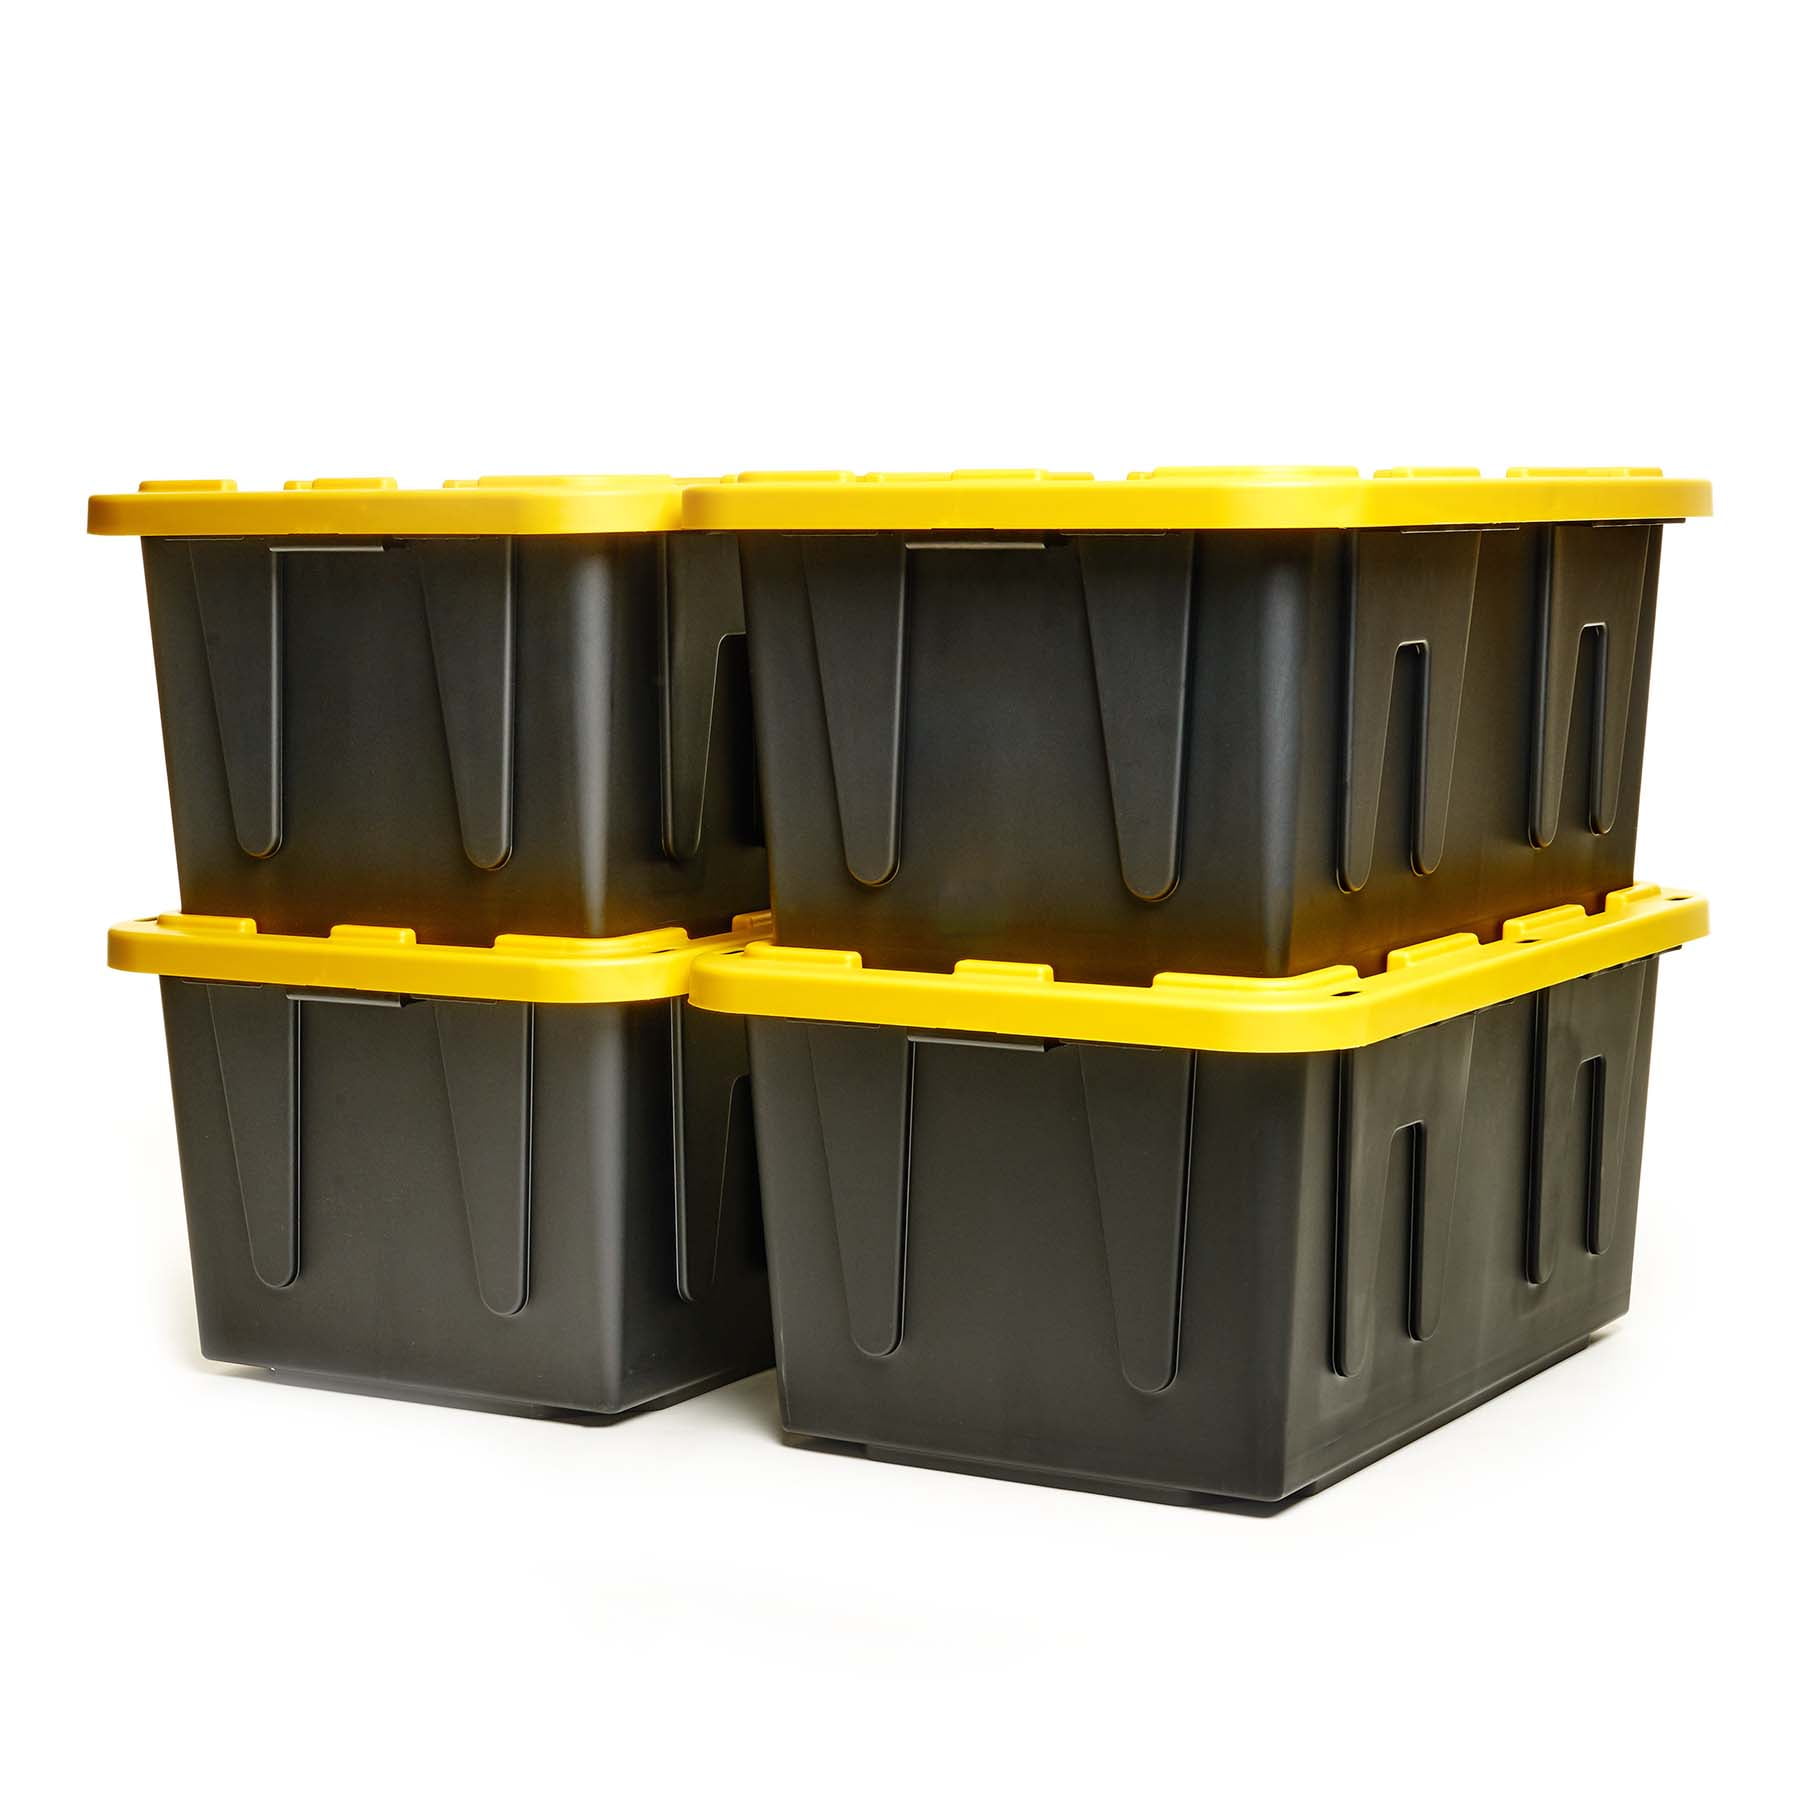 Edge Plastics 27 gal Black/Yellow Polymer Storage Tote